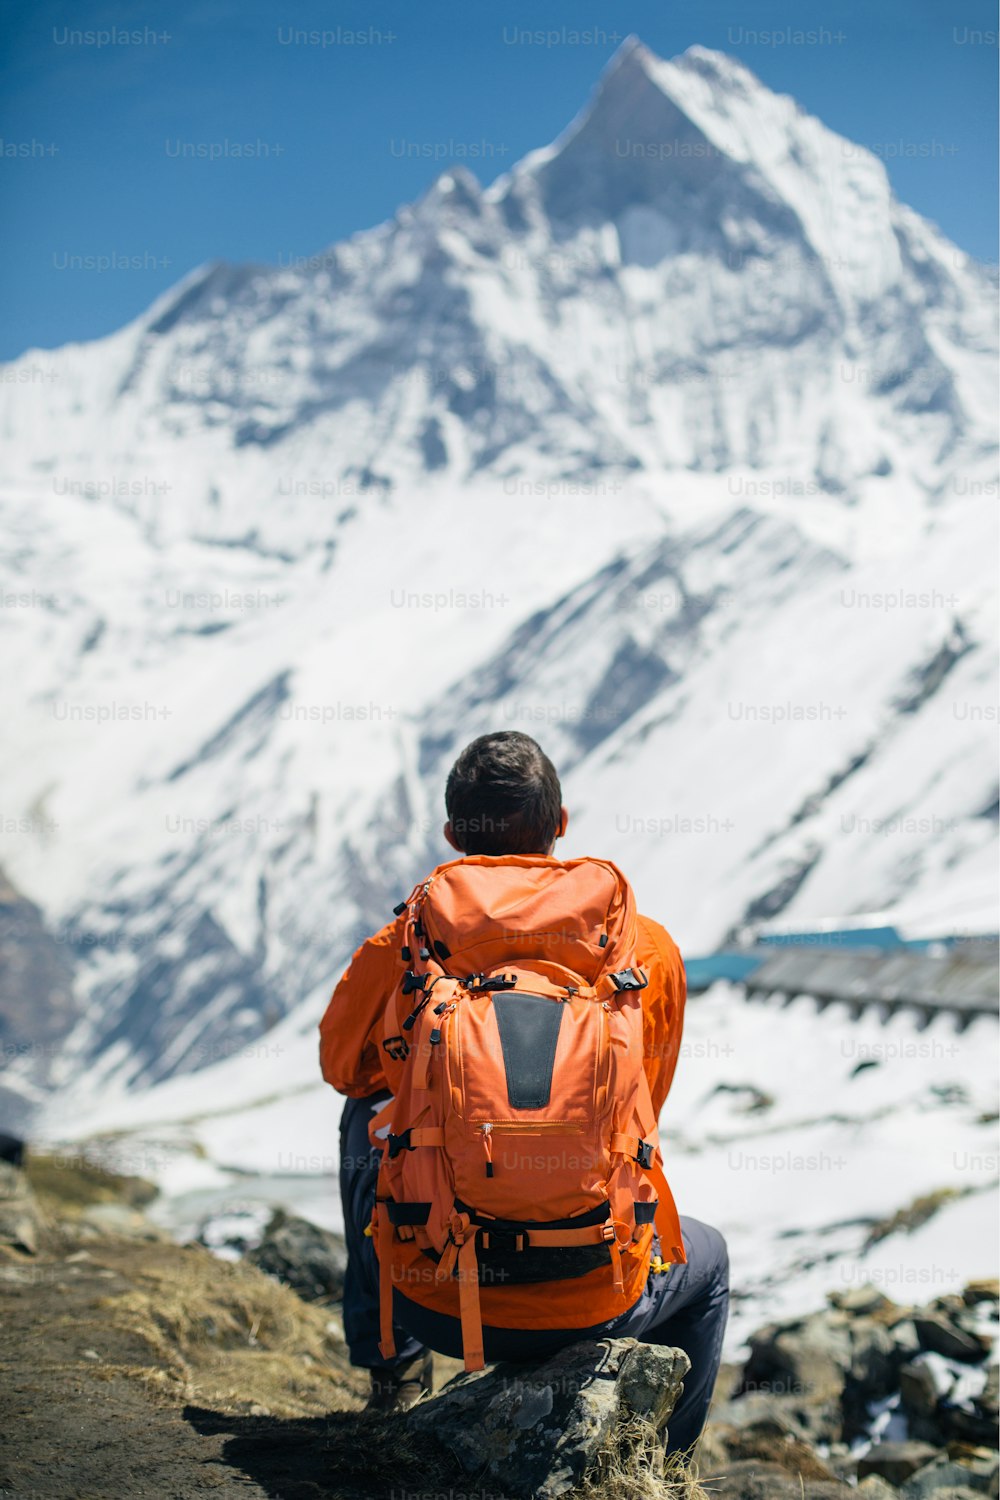 Mounteneer looking at the summit of Machapuchare (6993m), Annapurna Himal.